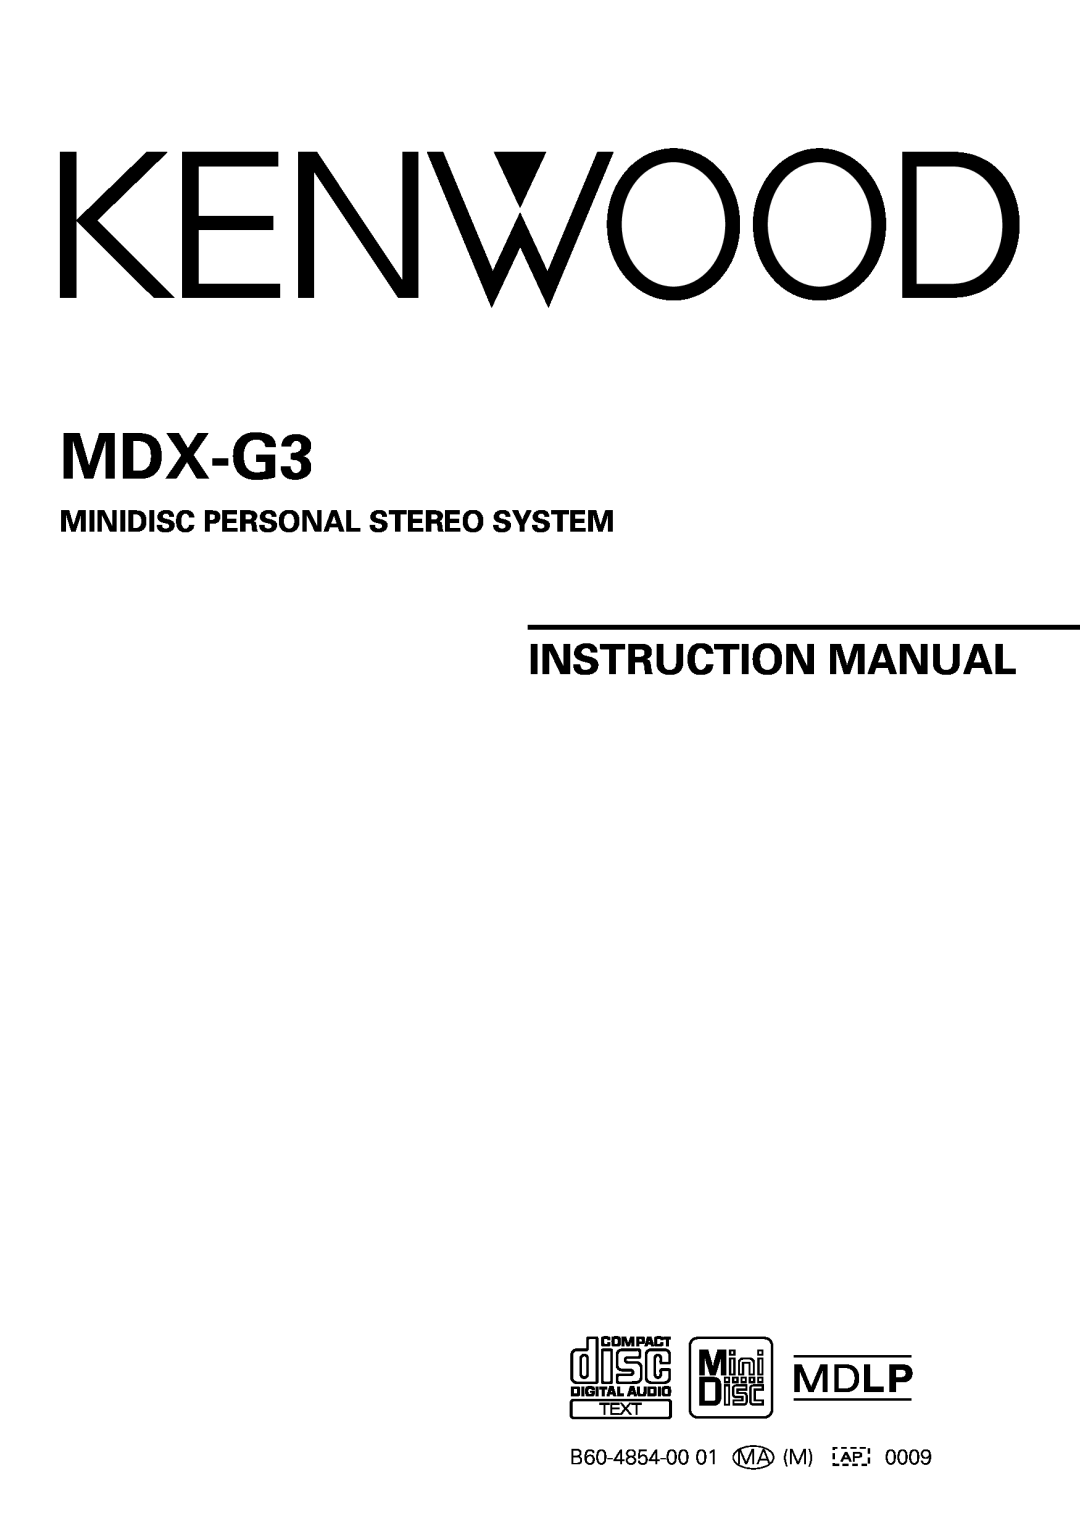 Kenwood MDX-G3 instruction manual Minidisc Personal Stereo System, Instruction Manual 